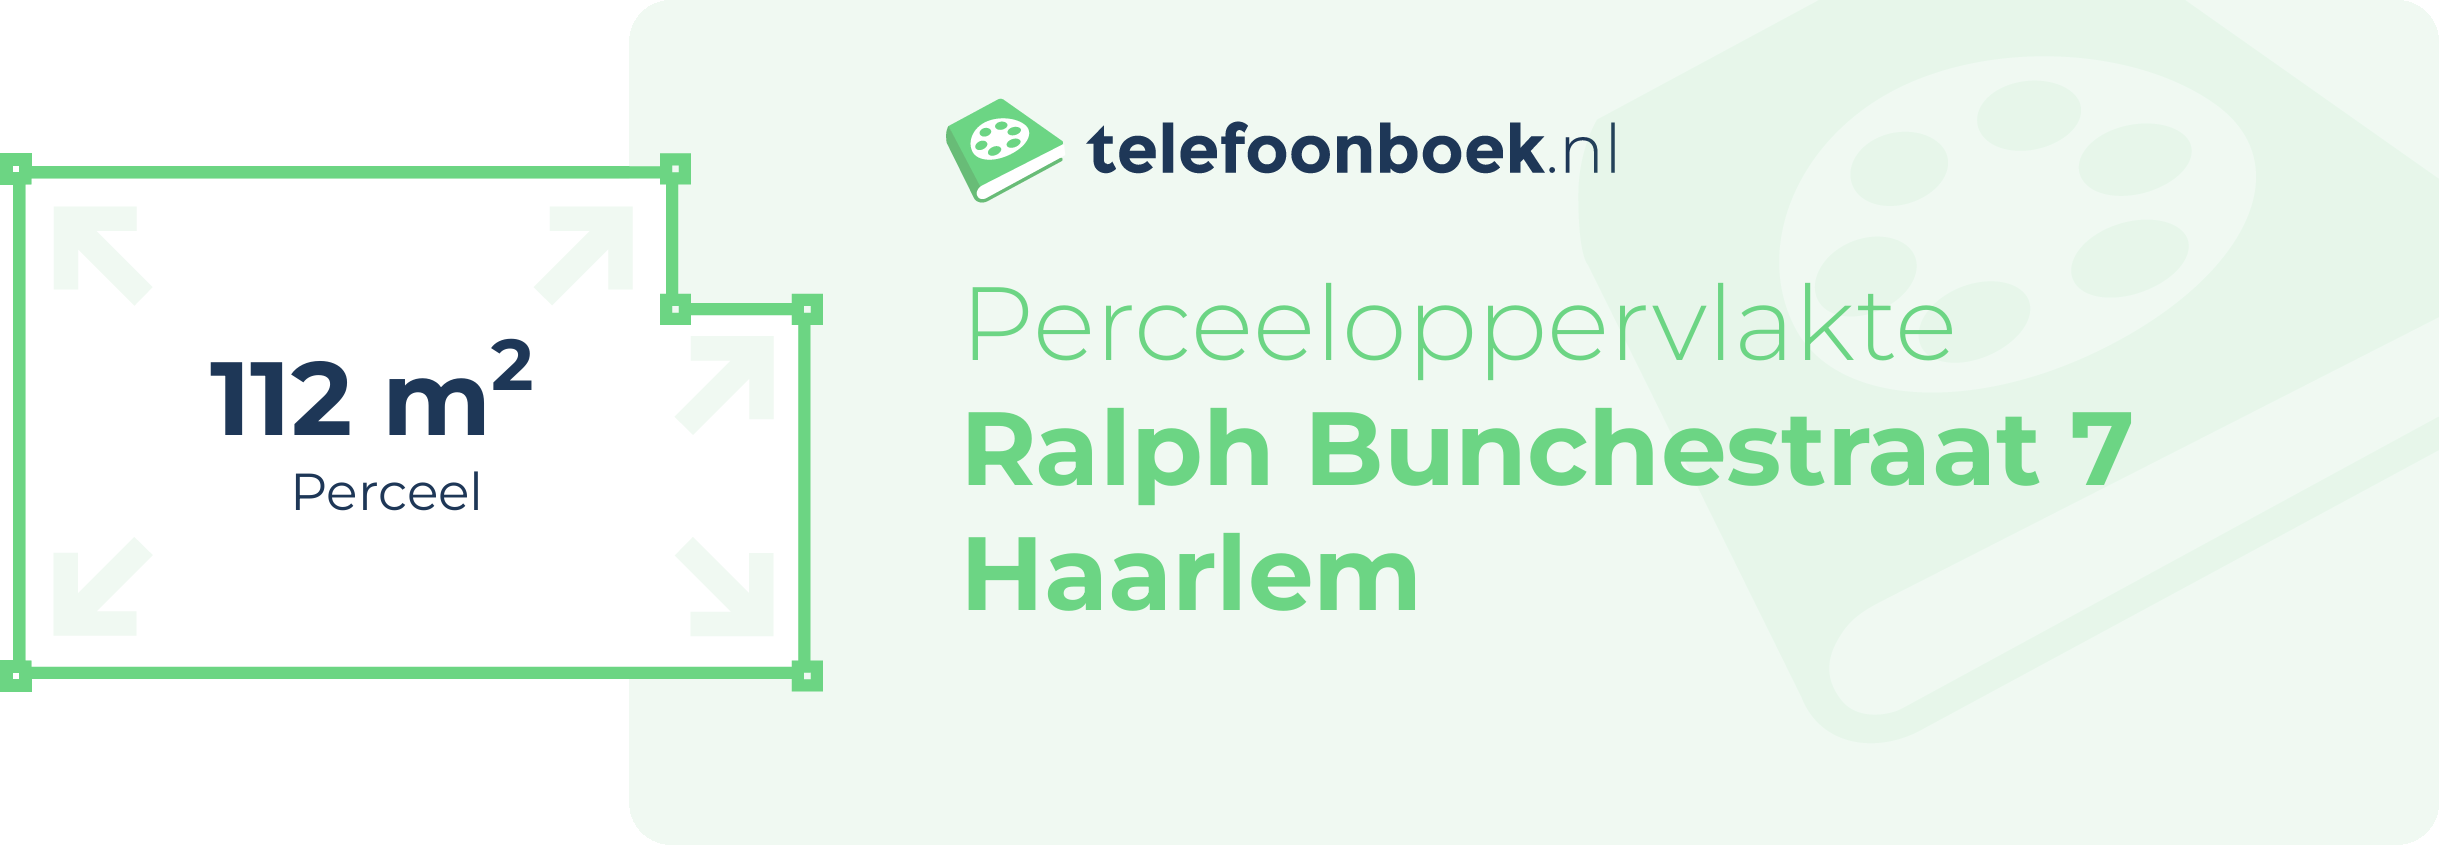 Perceeloppervlakte Ralph Bunchestraat 7 Haarlem